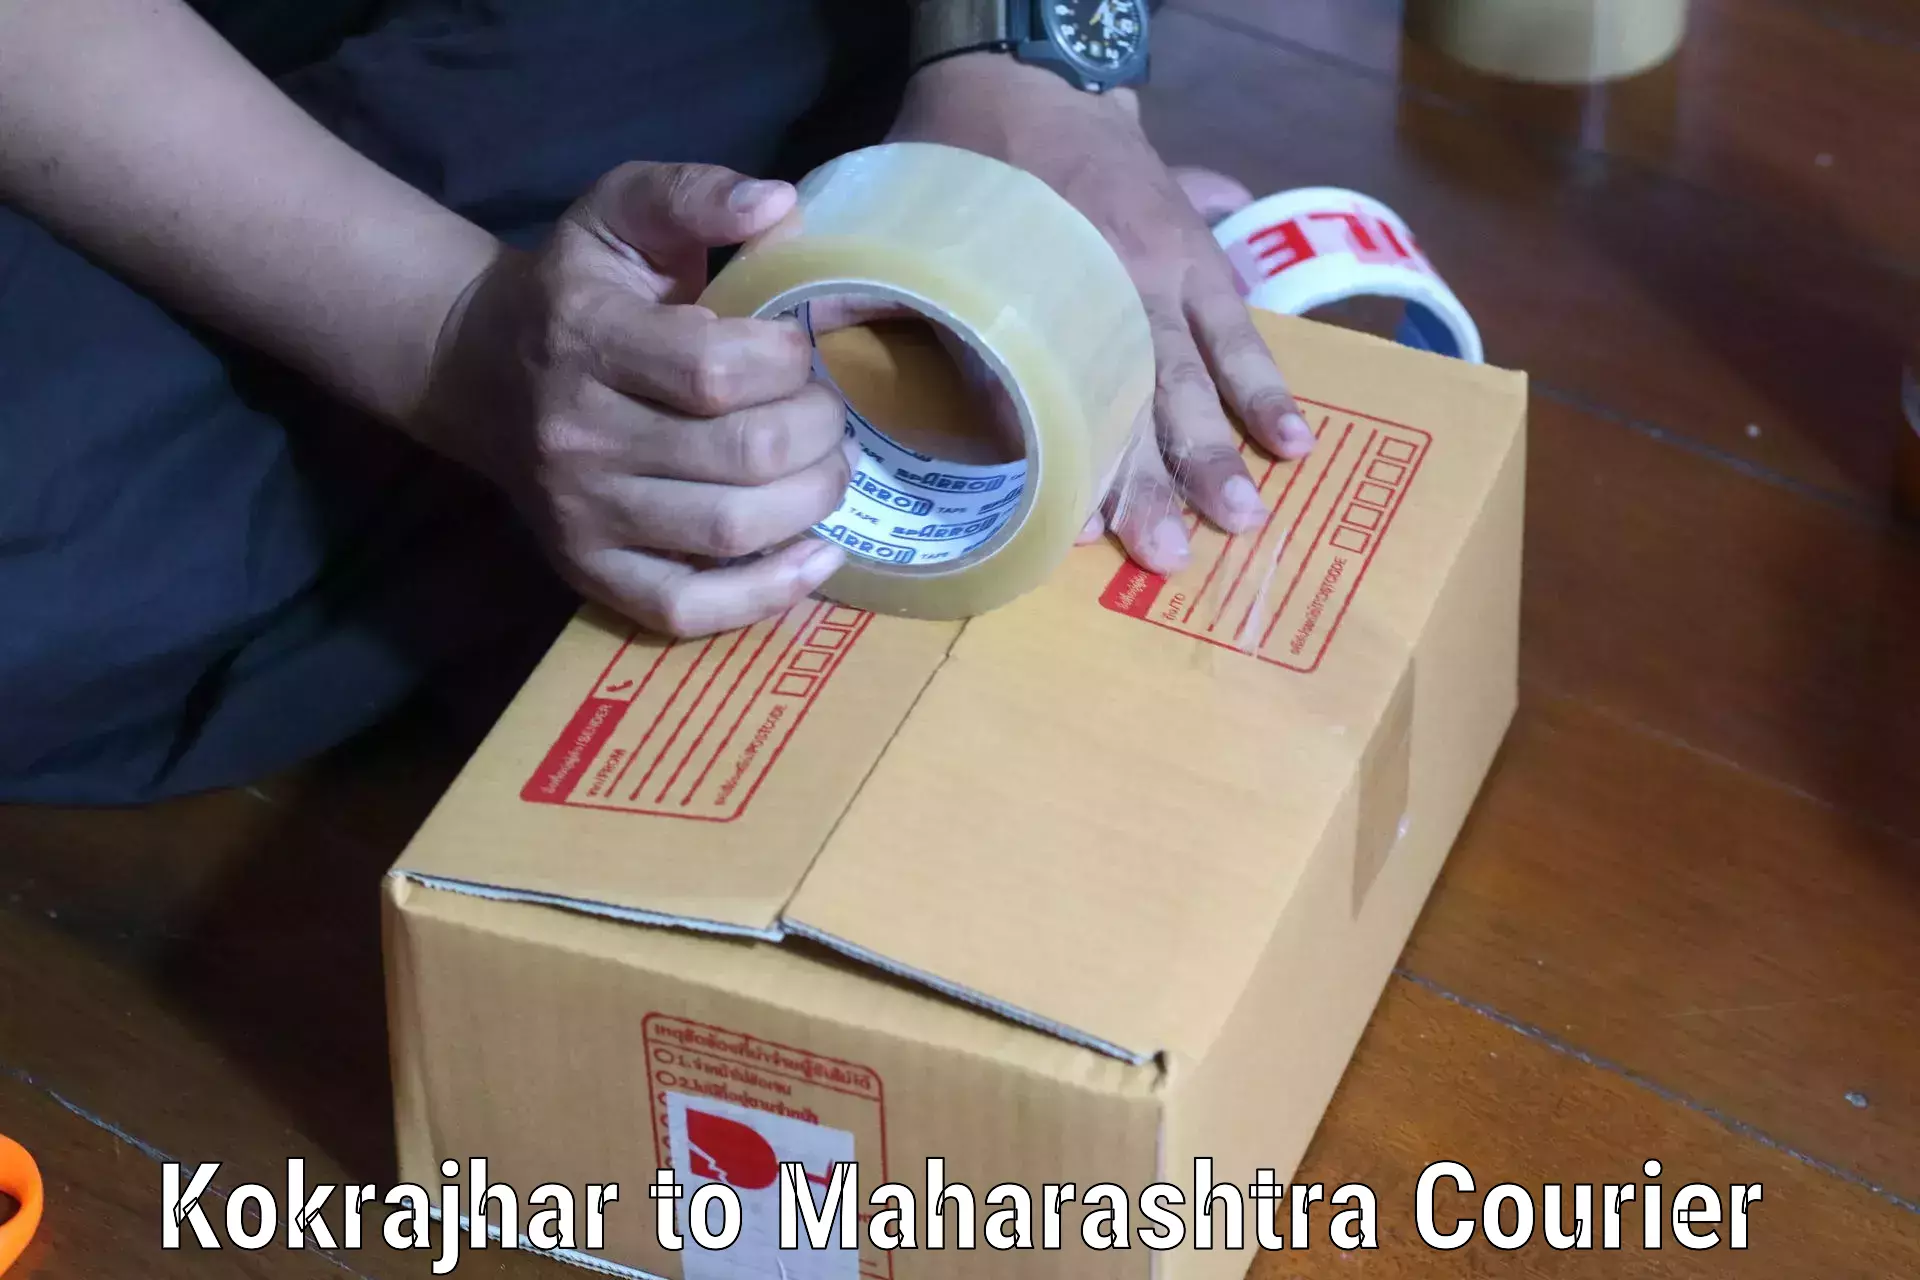 International courier networks Kokrajhar to Mumbai